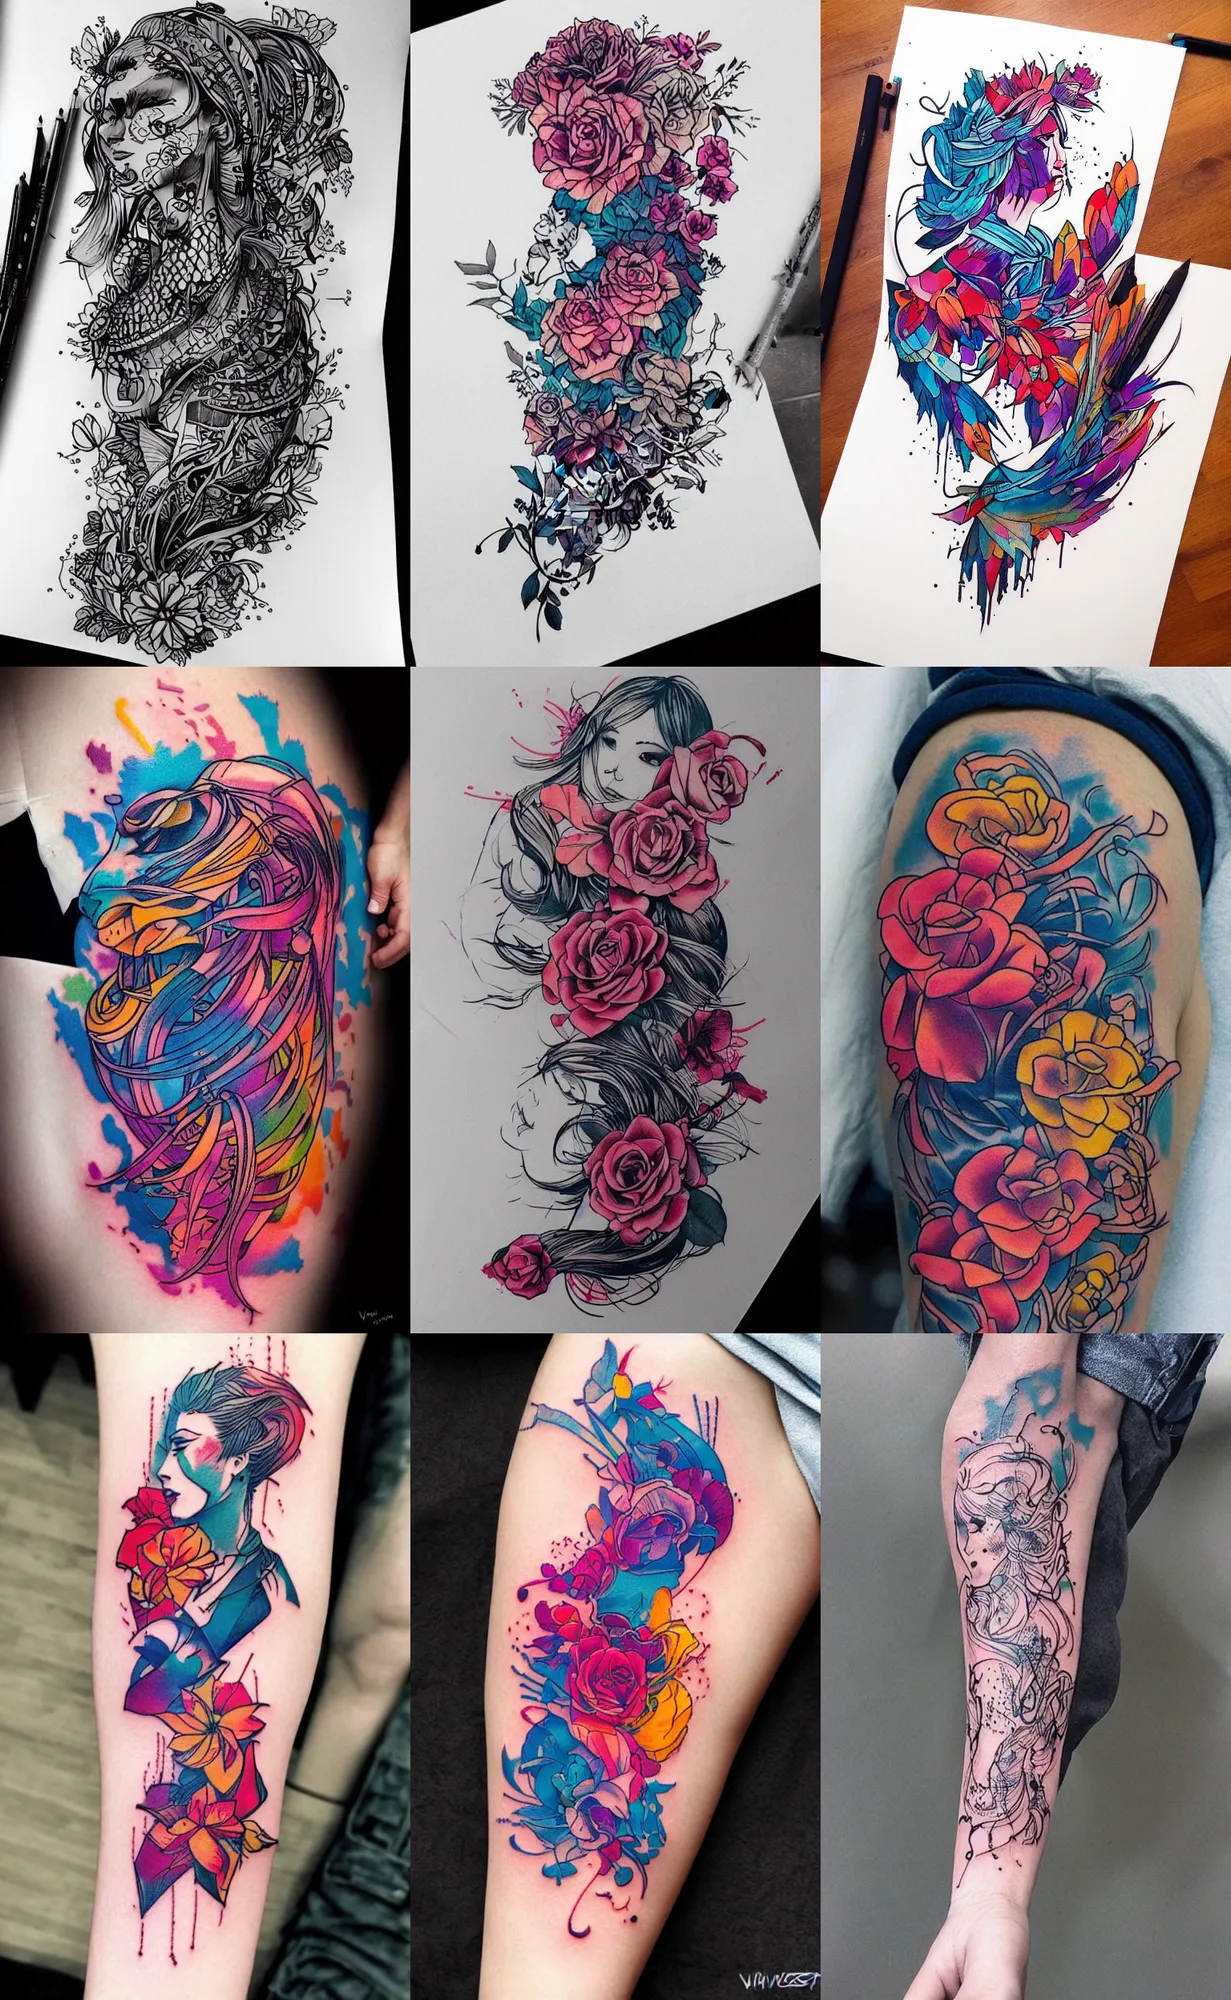 Prompt: Colour Tattoo stencil design, by WLOP, Rossdraws, James Jean